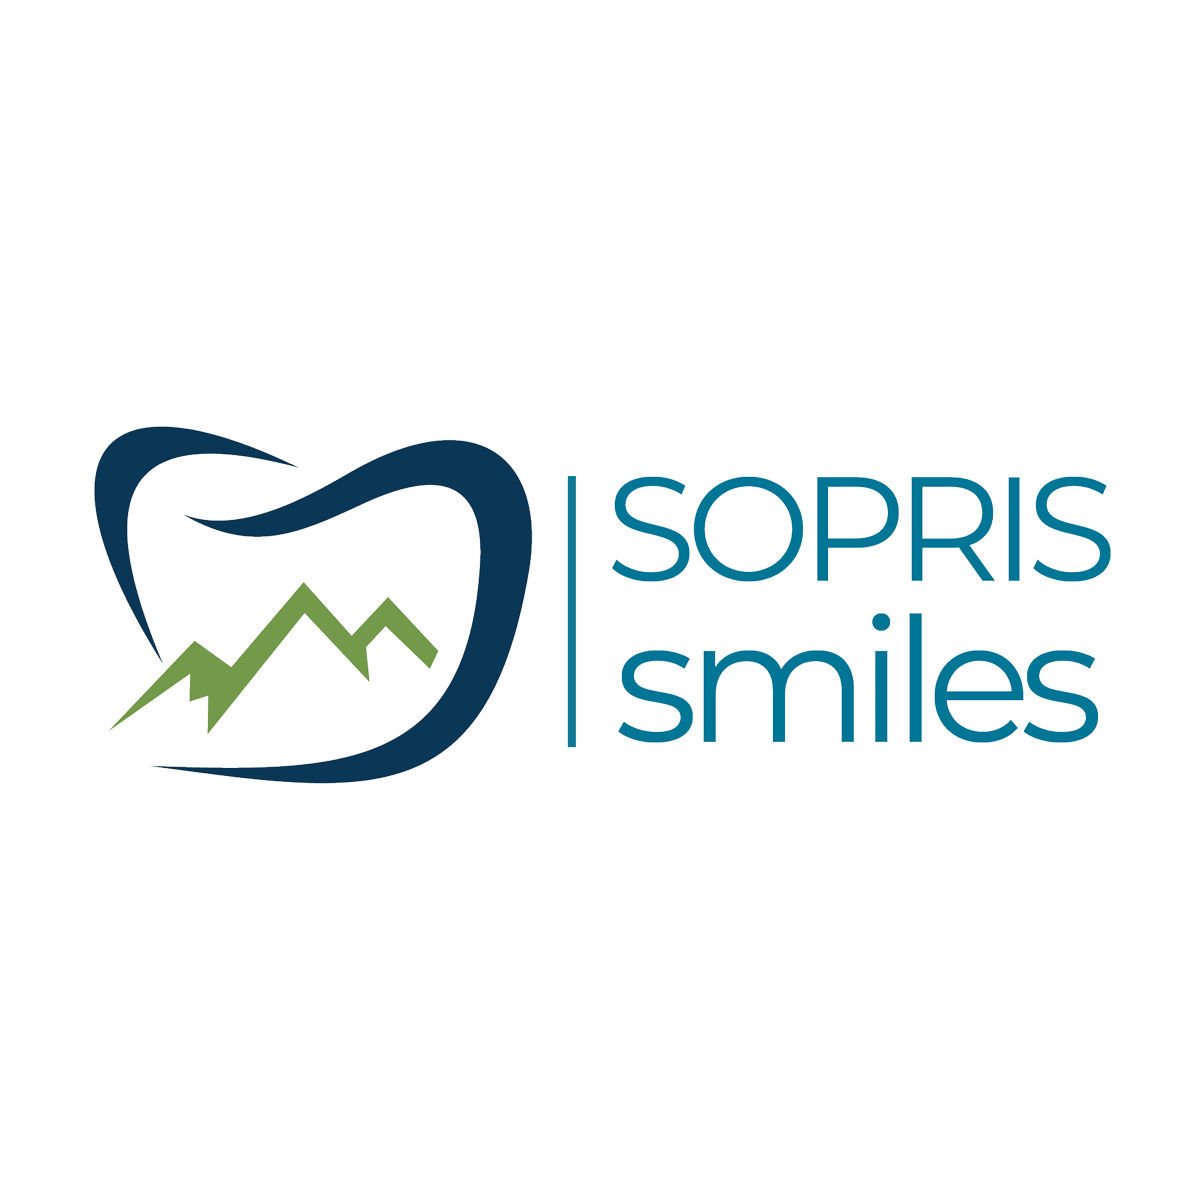 Sopris Smiles - Top Dental Software